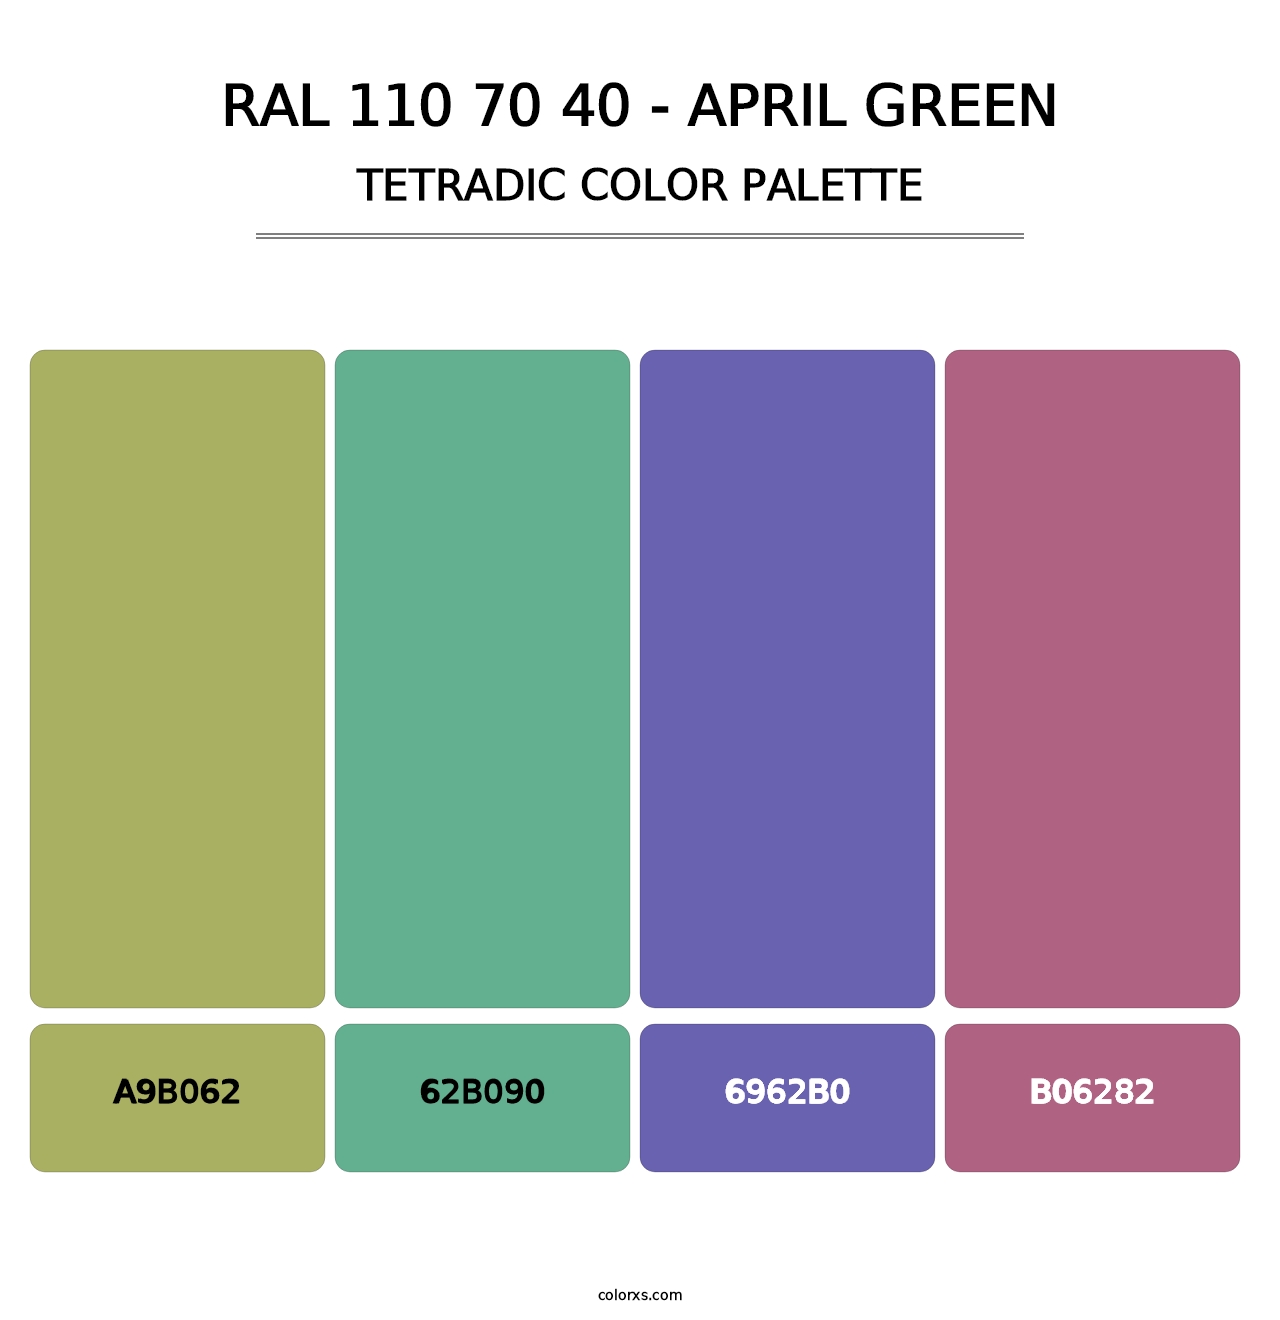 RAL 110 70 40 - April Green - Tetradic Color Palette